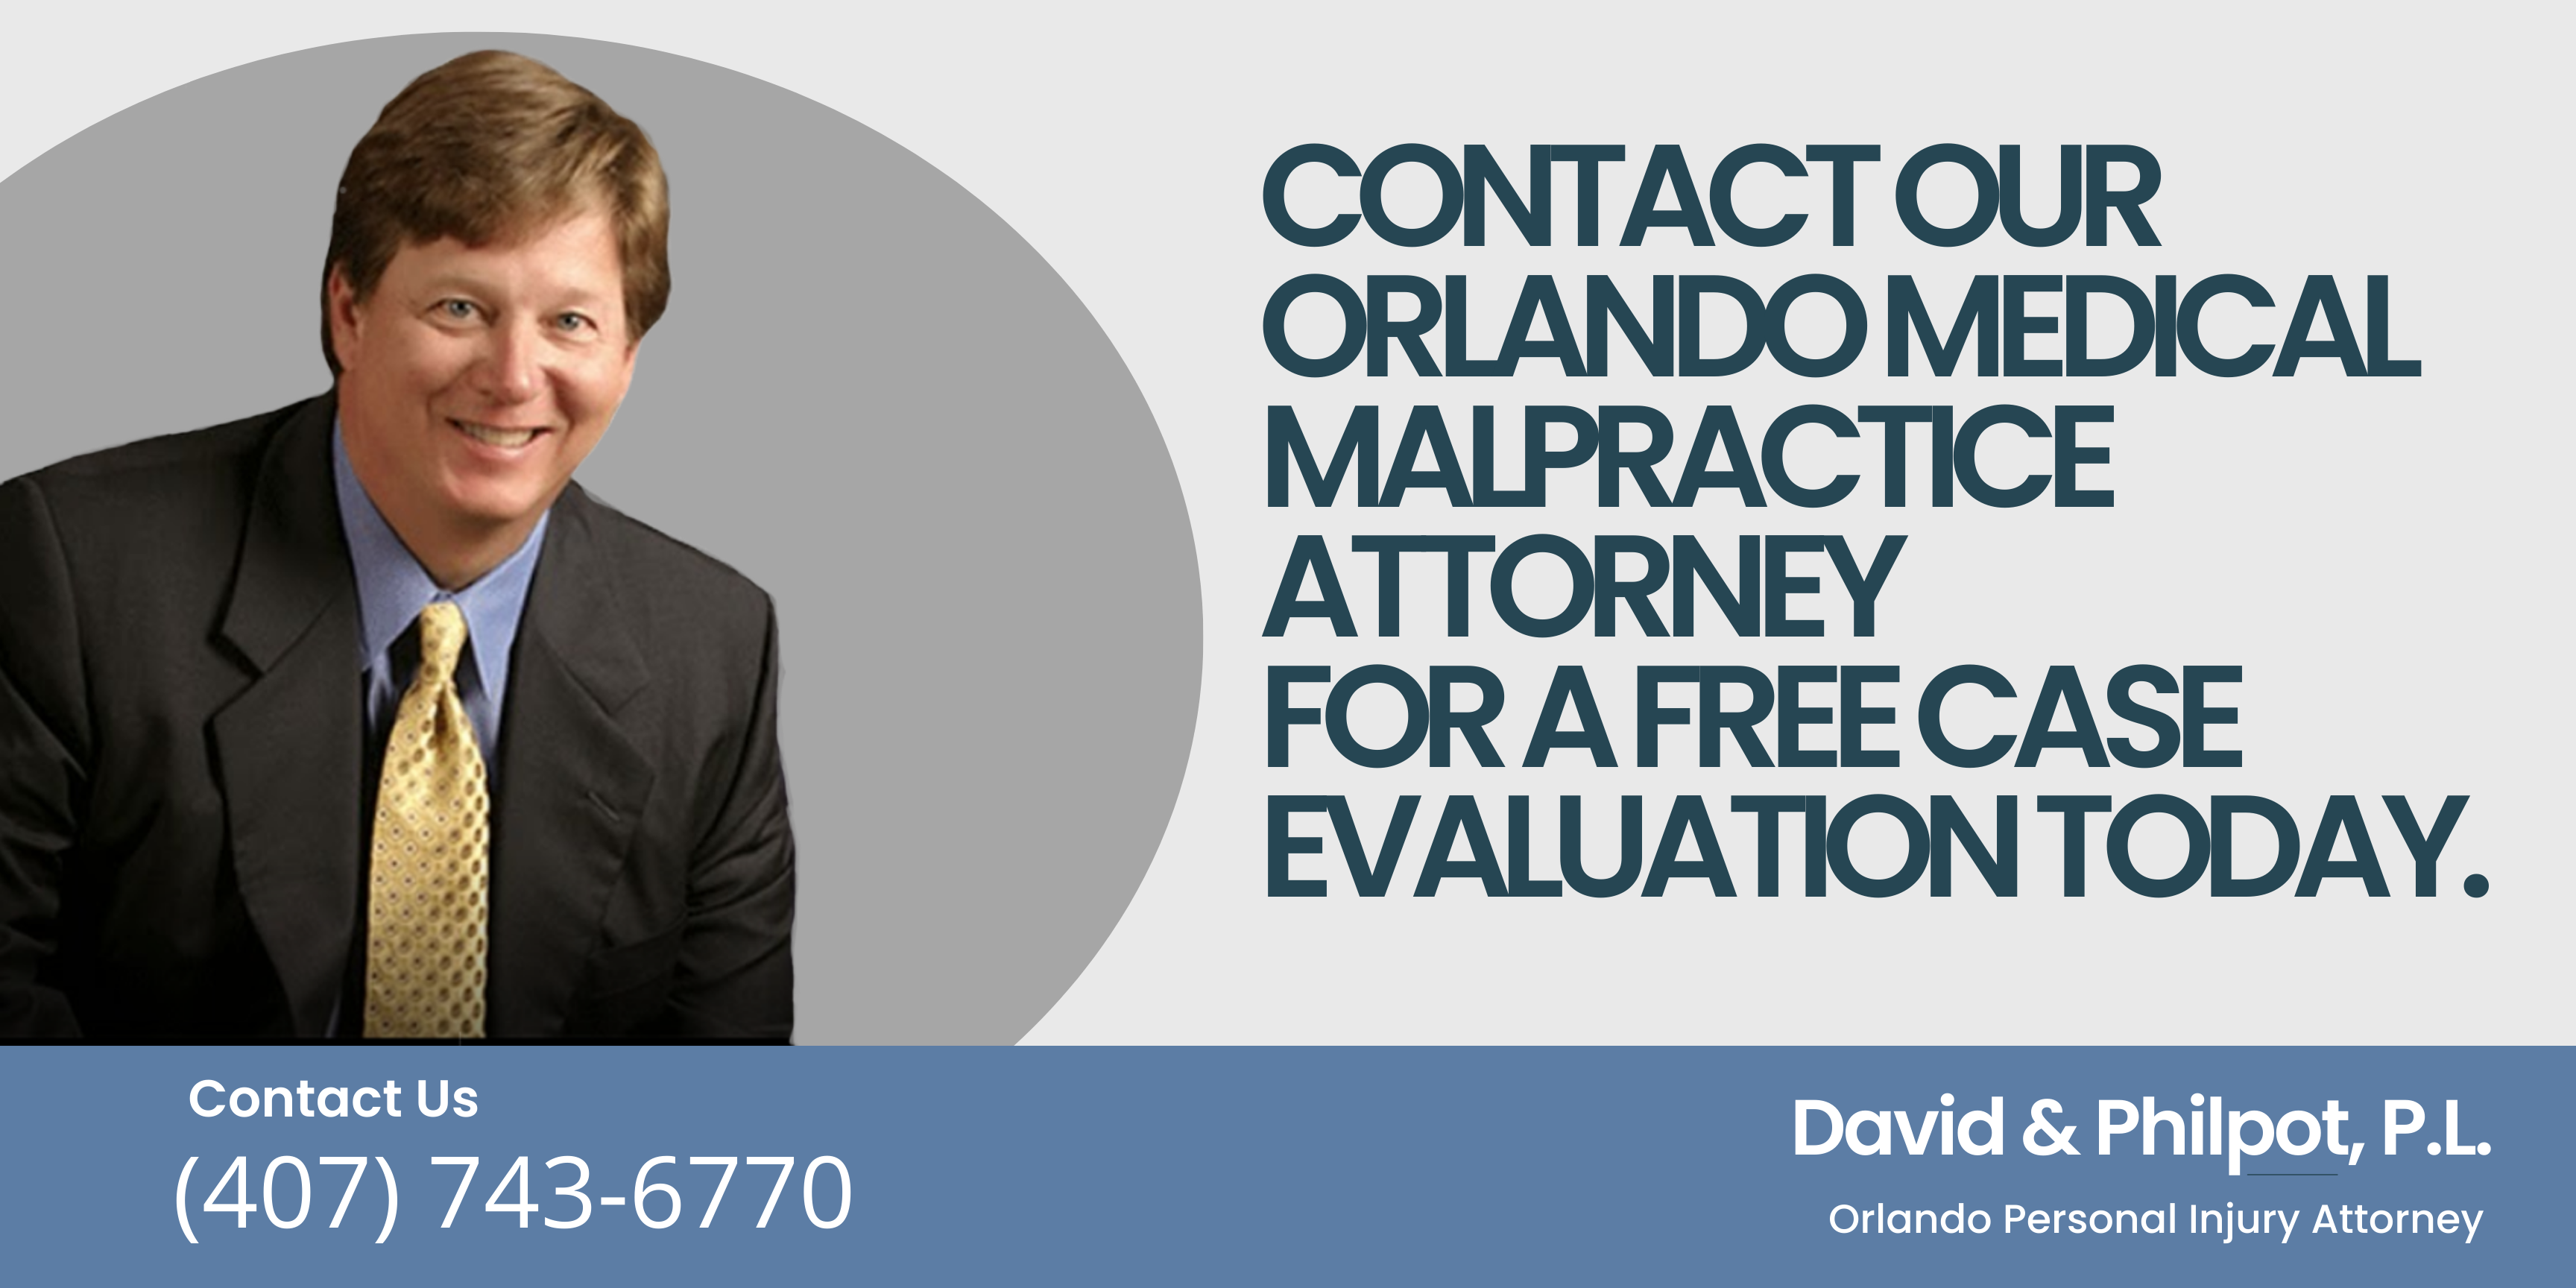 contact our Orlando Medical Malpractice Attorney